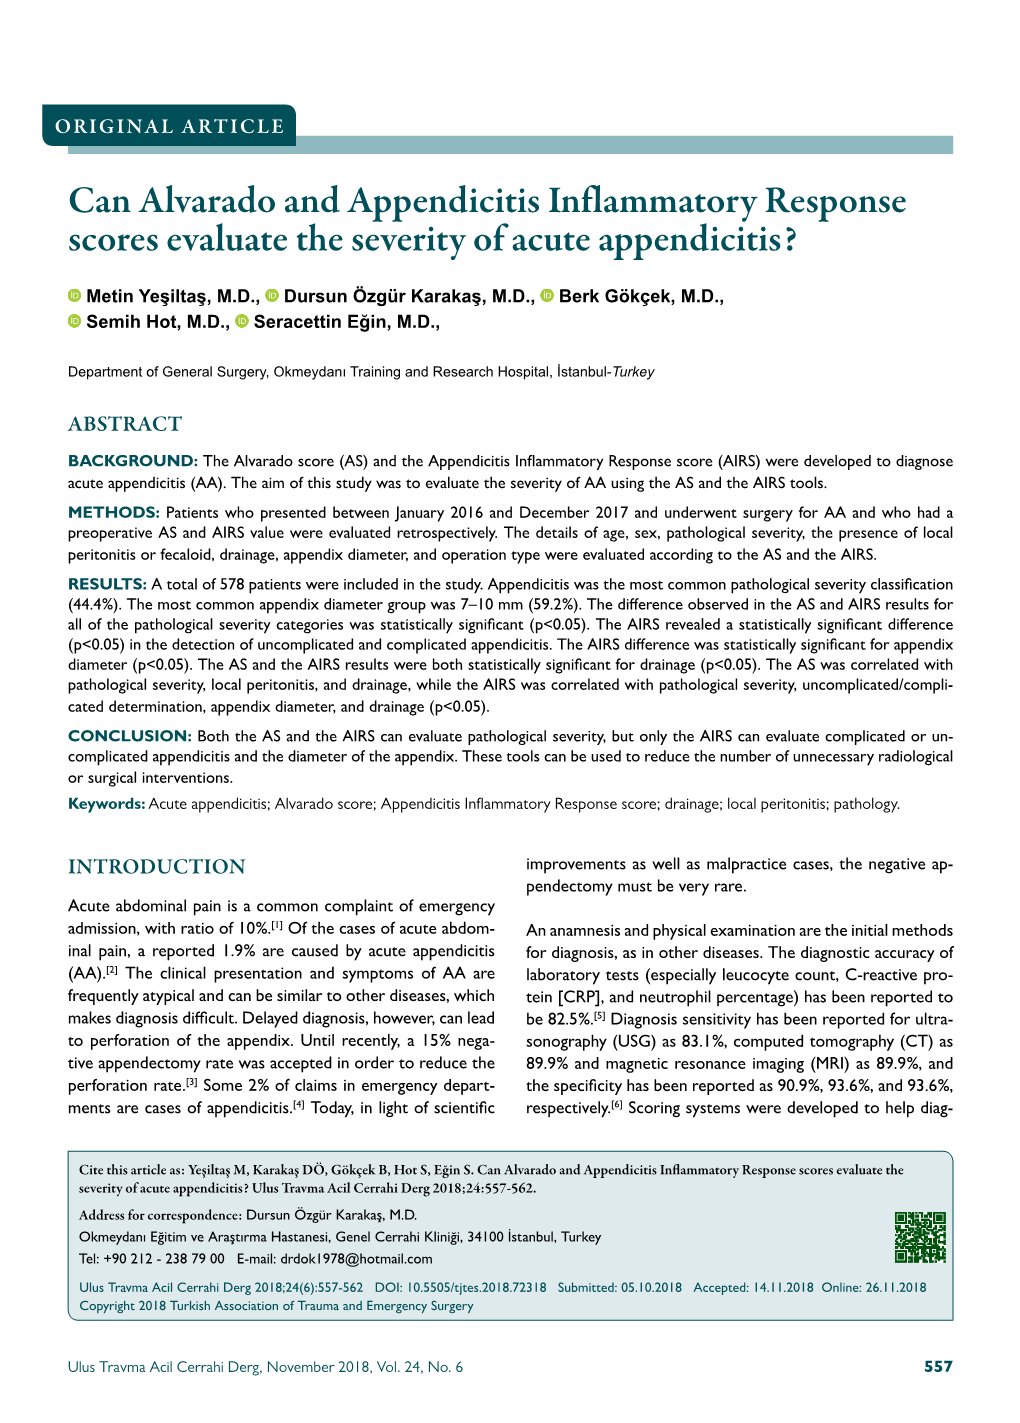 Can Alvarado and Appendicitis Inflammatory Response Scores Evaluate the Severity of Acute Appendicitis?